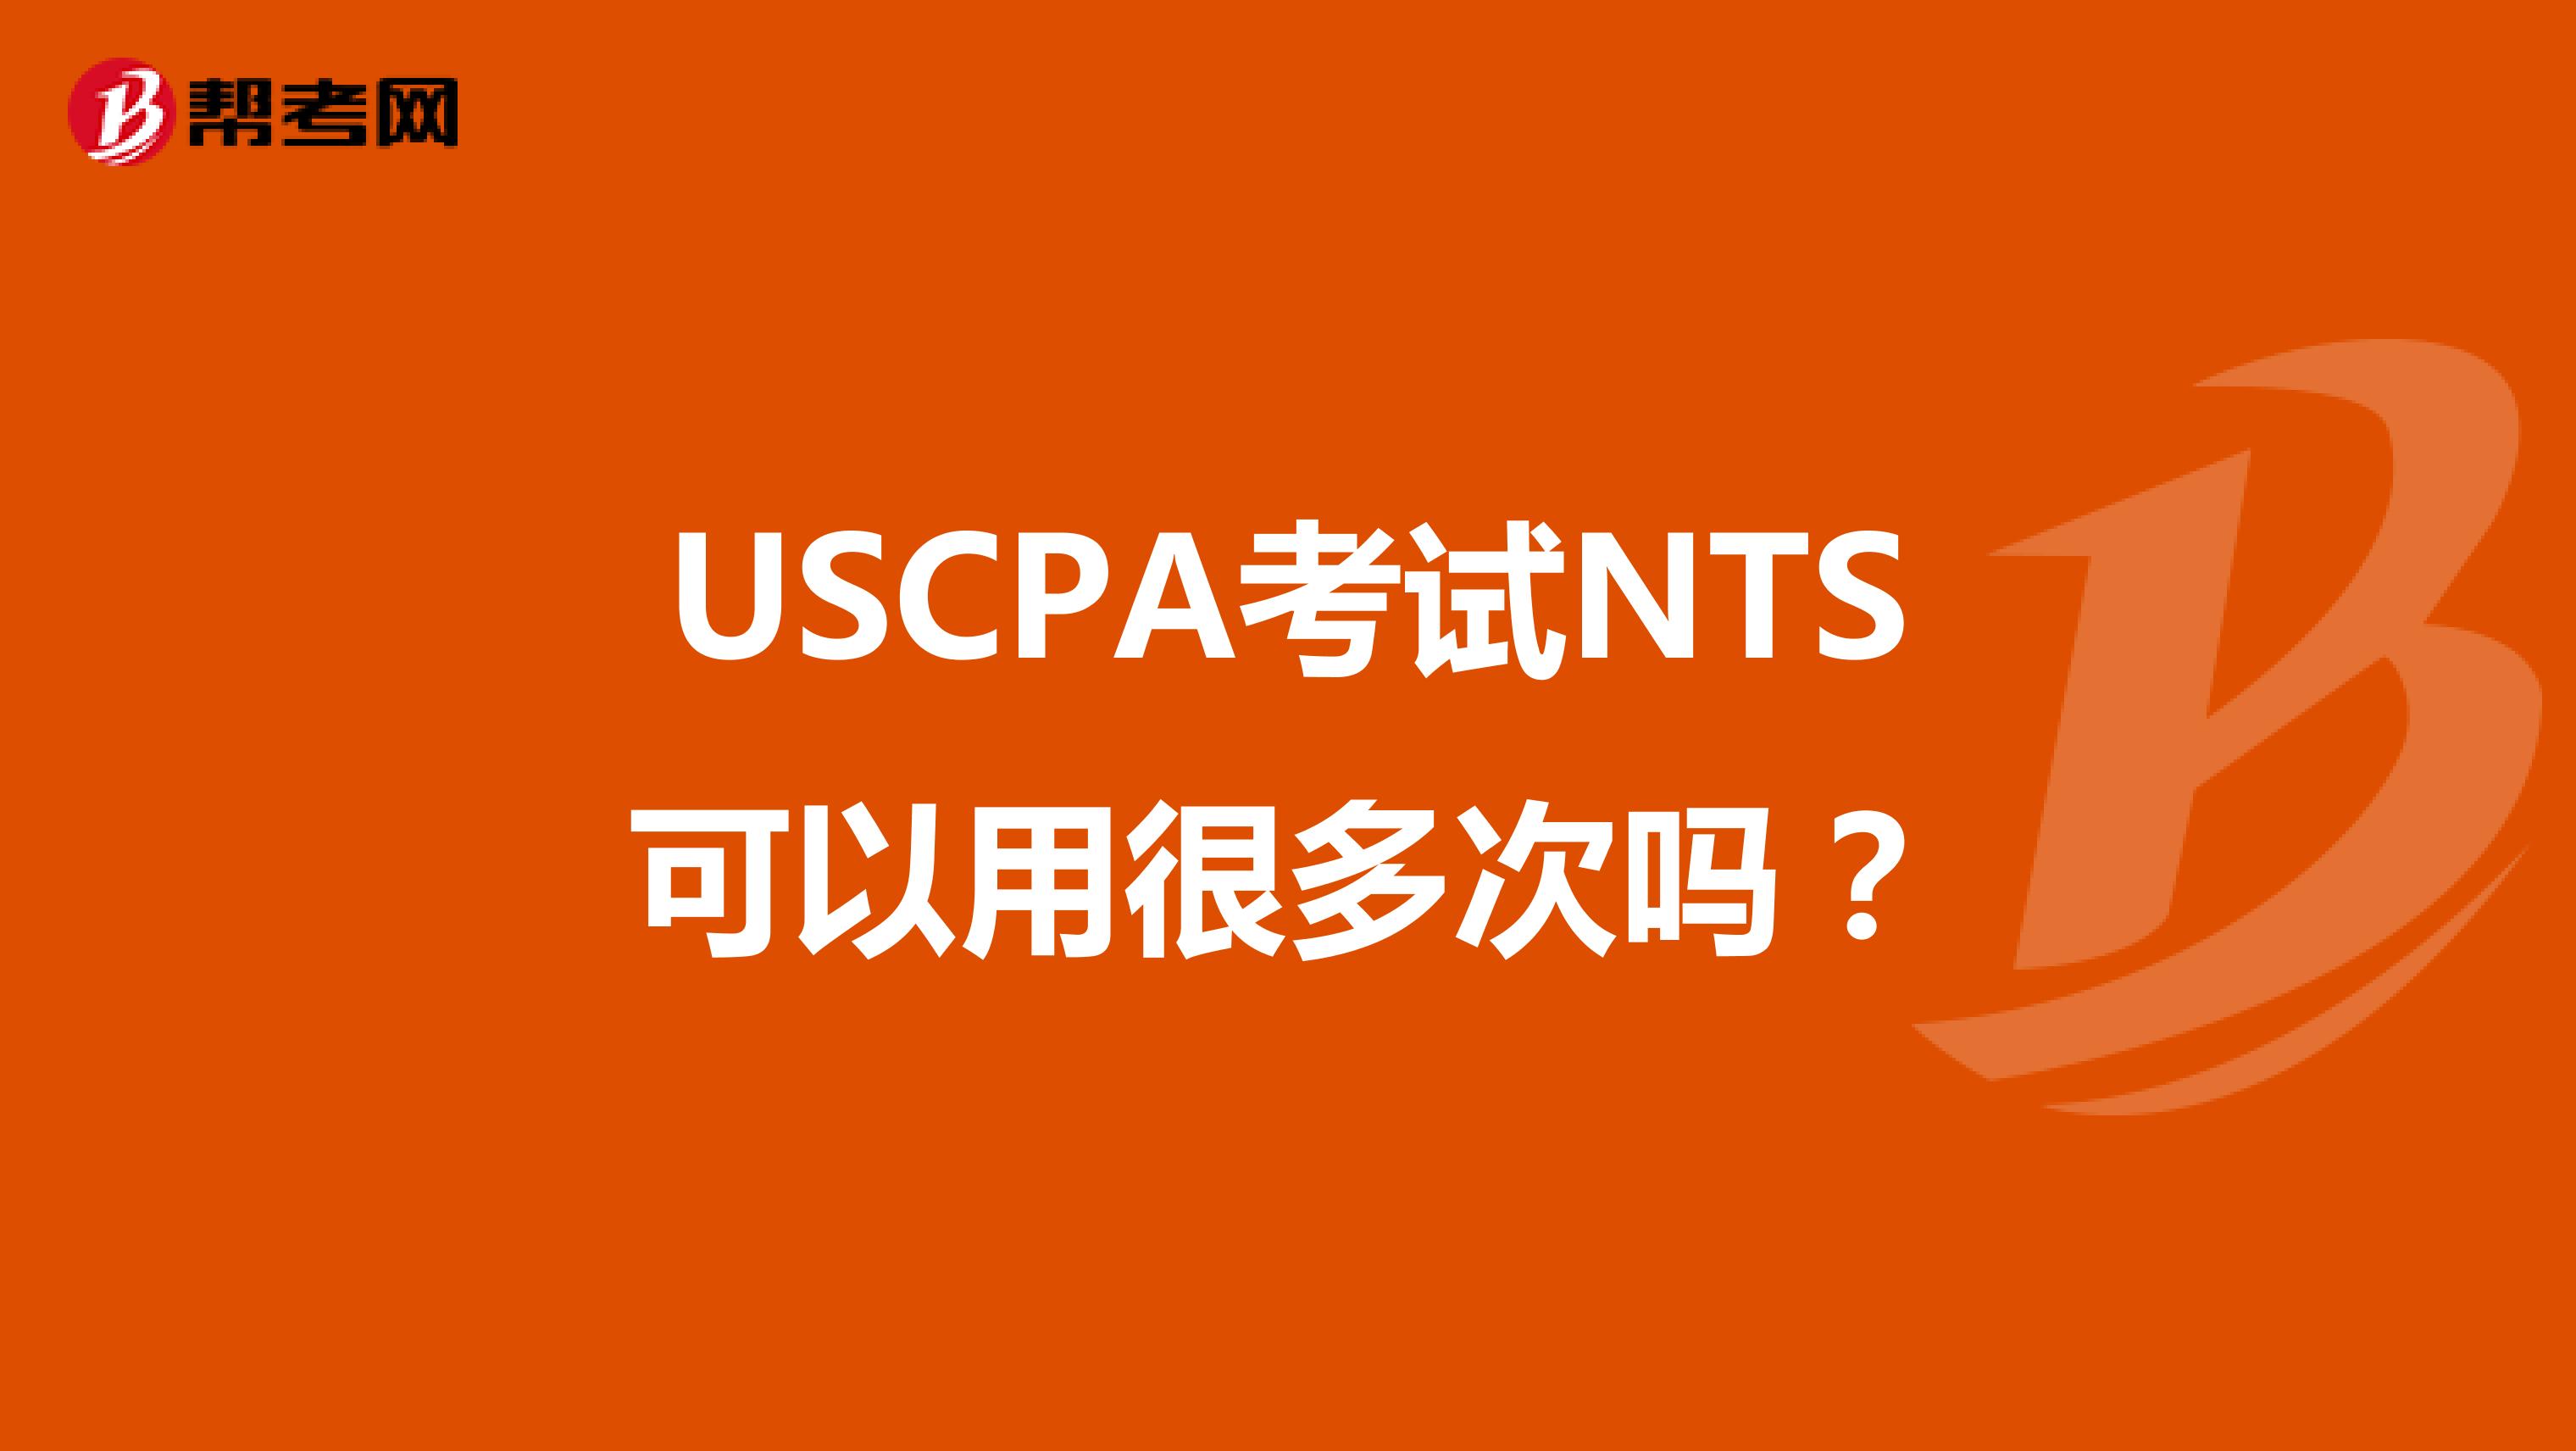 USCPA考试NTS可以用很多次吗？